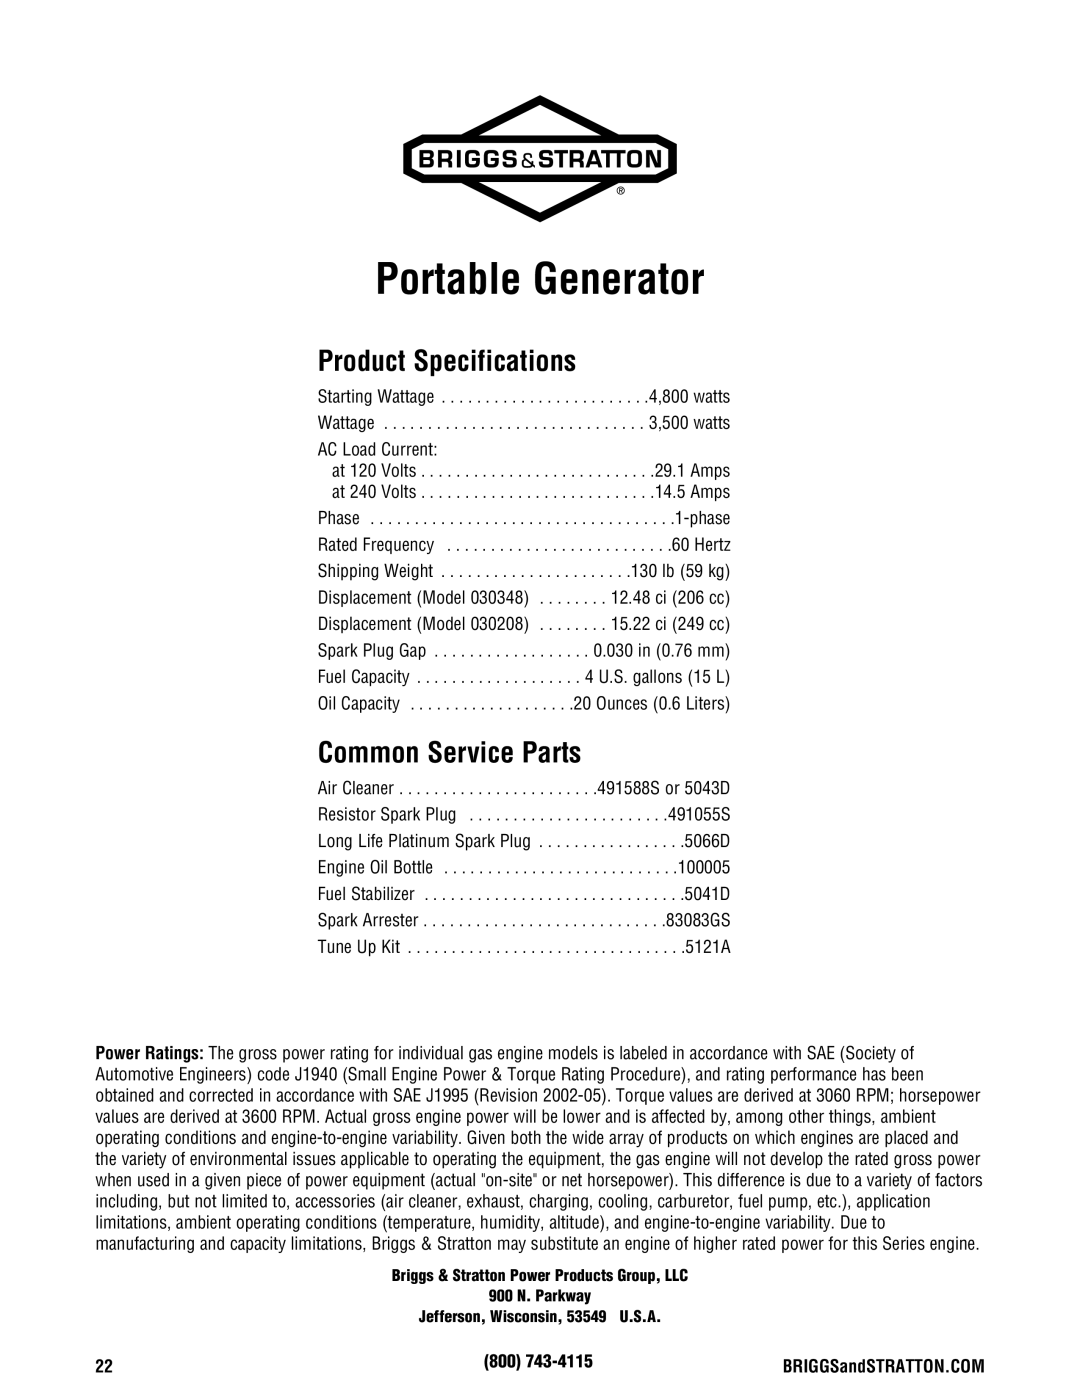 Briggs & Stratton 030248-0 manual Portable Generator, Product Specifications, Common Service Parts 